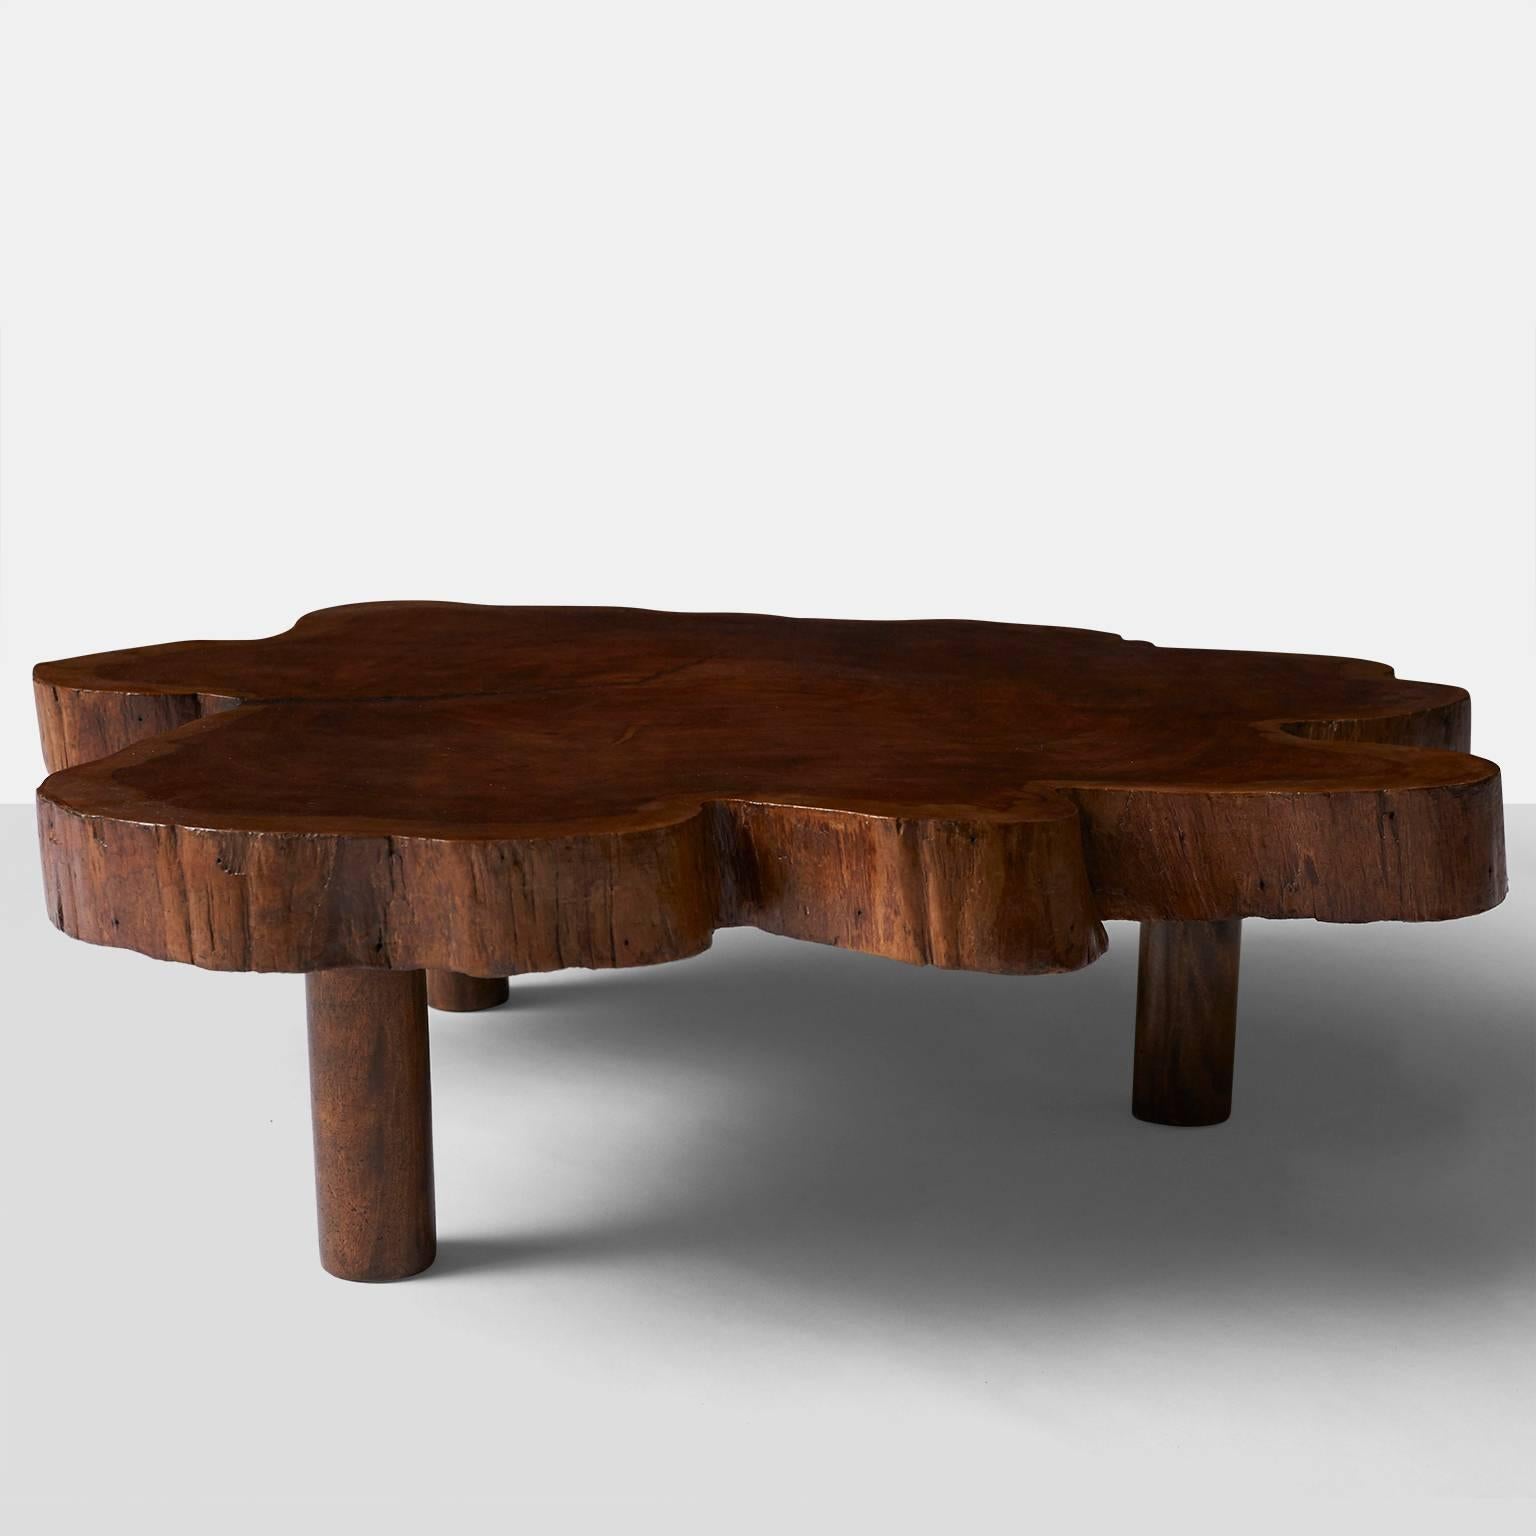 An exceptionally rare "tronco" table in solid Jacaranda by Joaquim Tenreiro for the Tenreiro Models & Decoraciones store in Rio de Janeiro, circa 1960s.
Retains the original label.